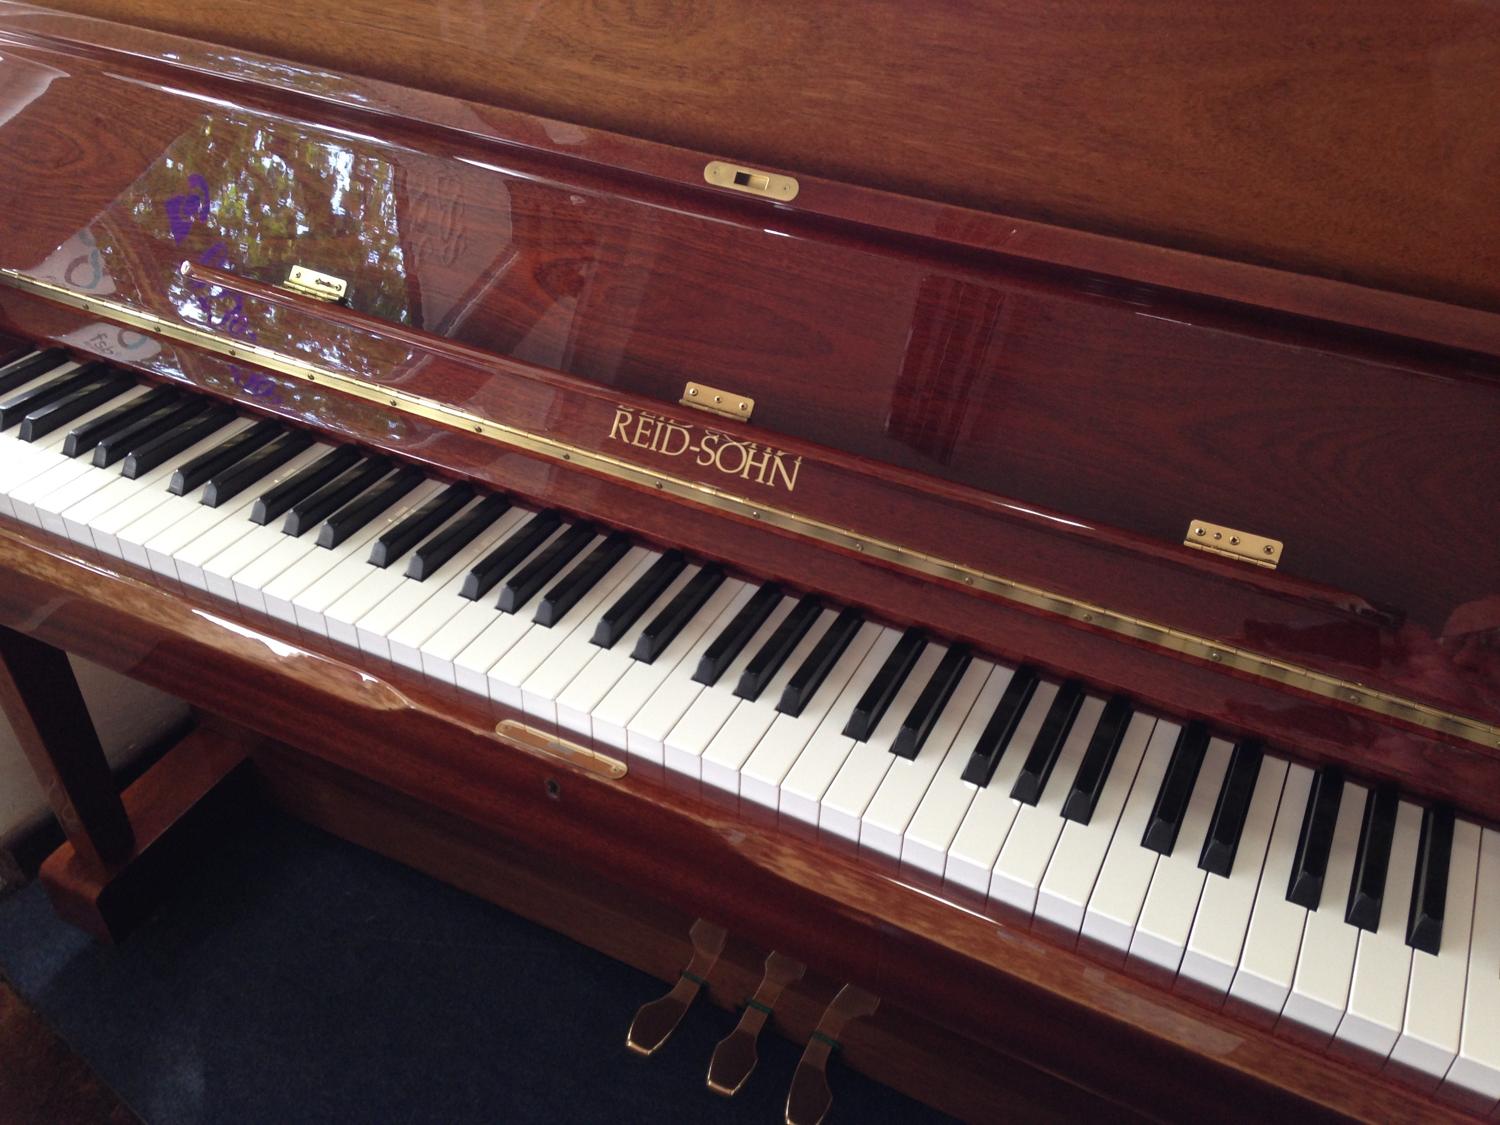 Reid-Sohn modern upright piano for sale